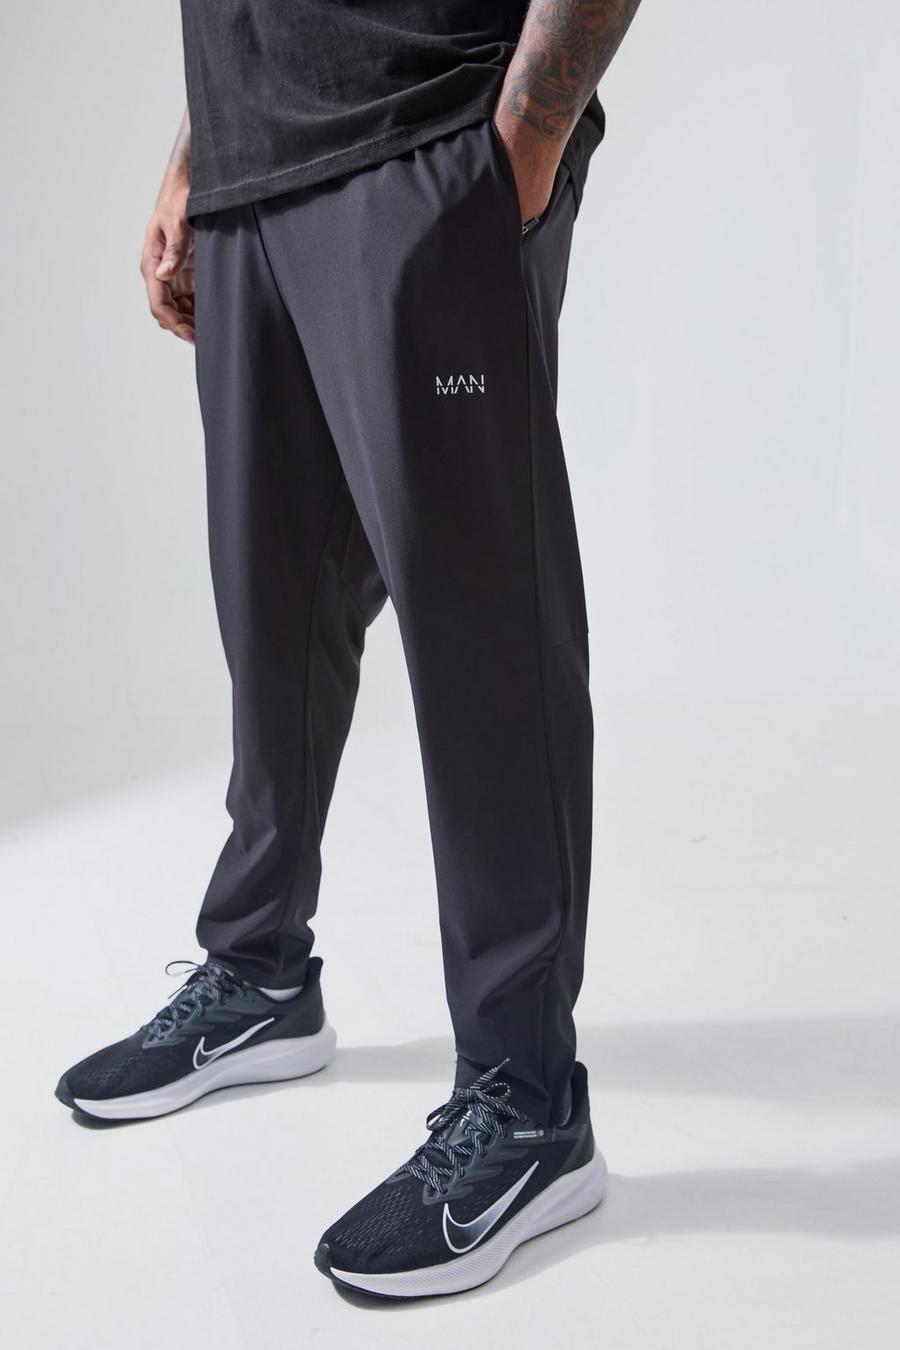 Pantaloni tuta Plus Size Man Active Gym per alta performance con tasche e zip, Black